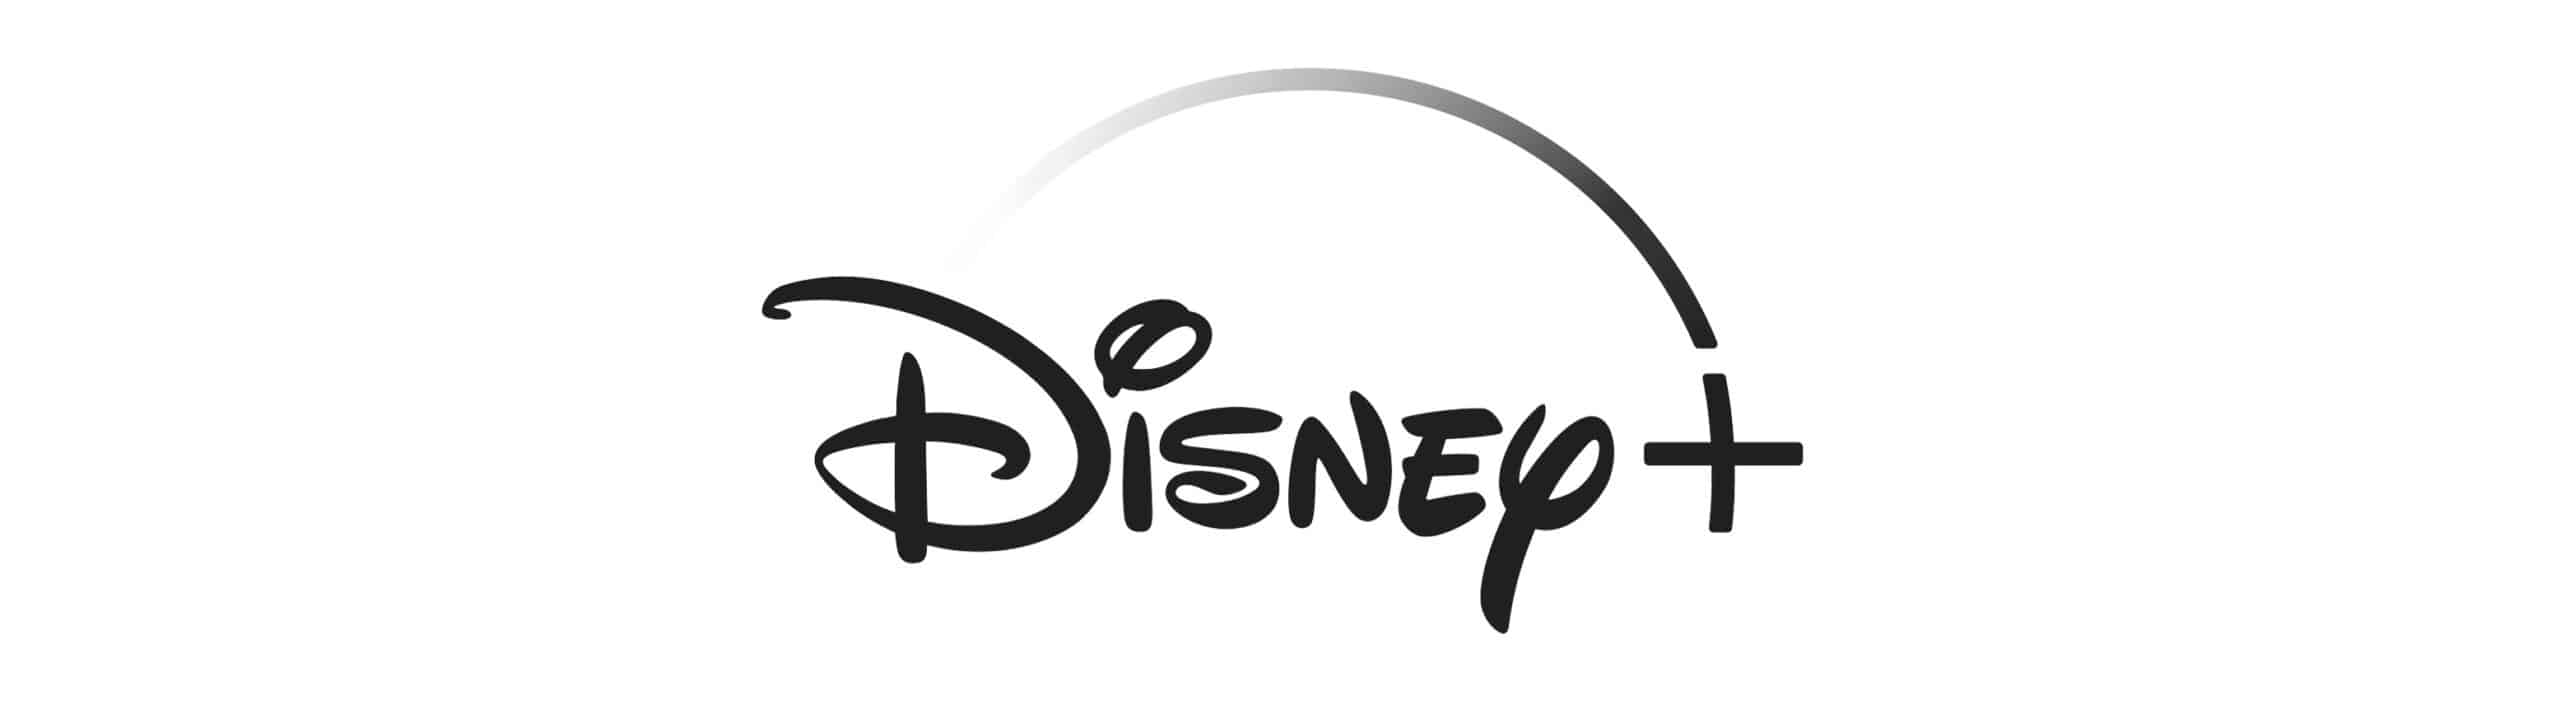 Disney-plus-logo